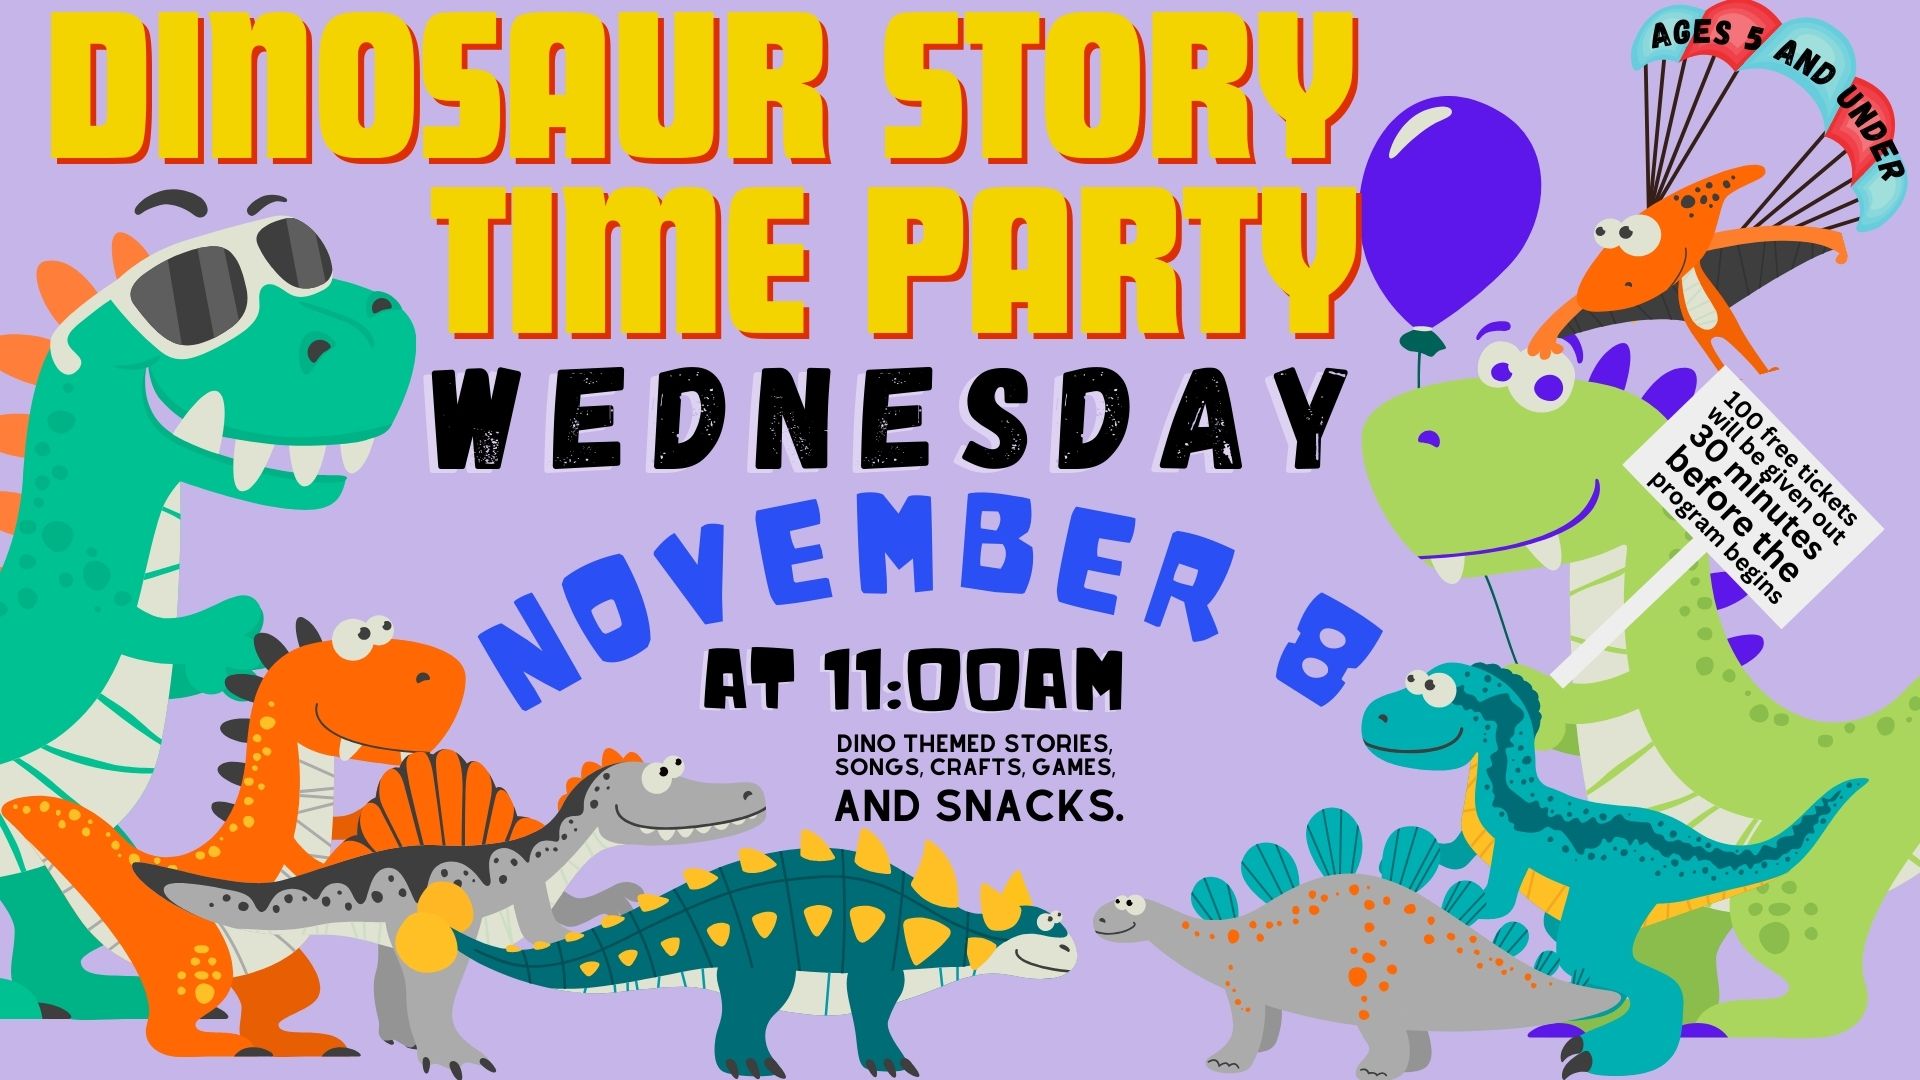 Dinosaur story time